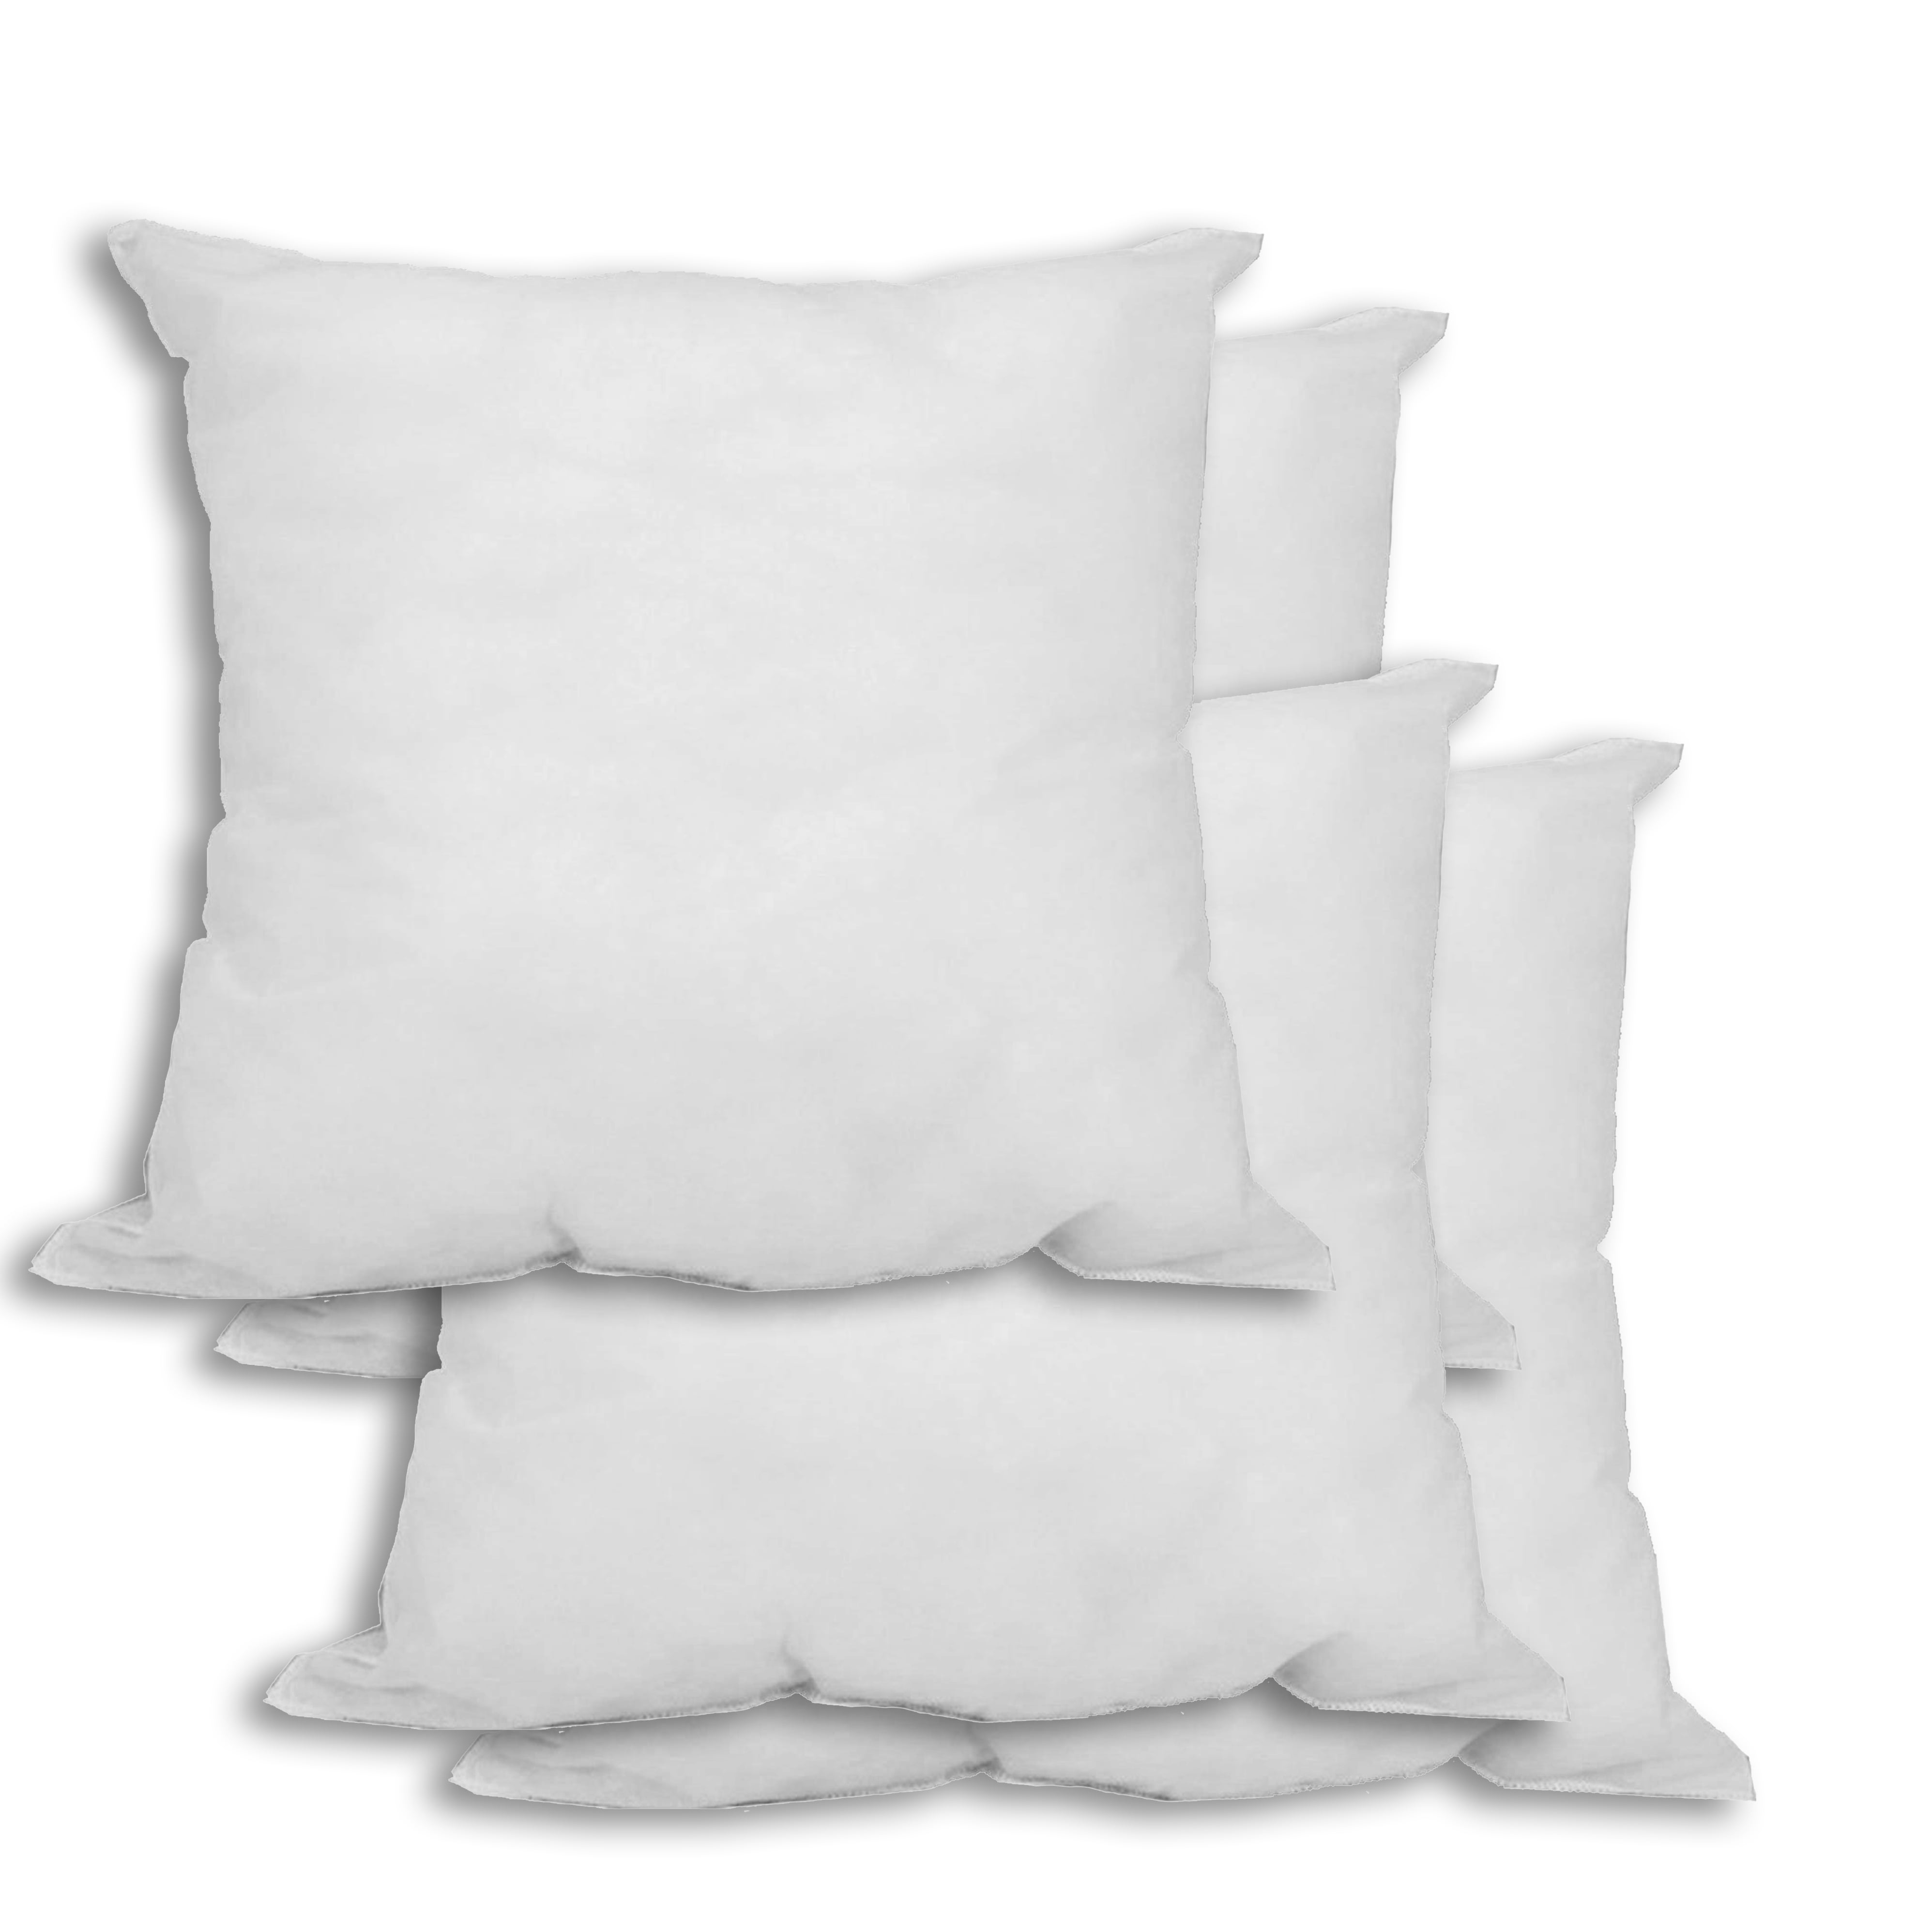 Mybecca Set of 4 - 18 x 18 Premium Hypoallergenic Stuffer Pillow 